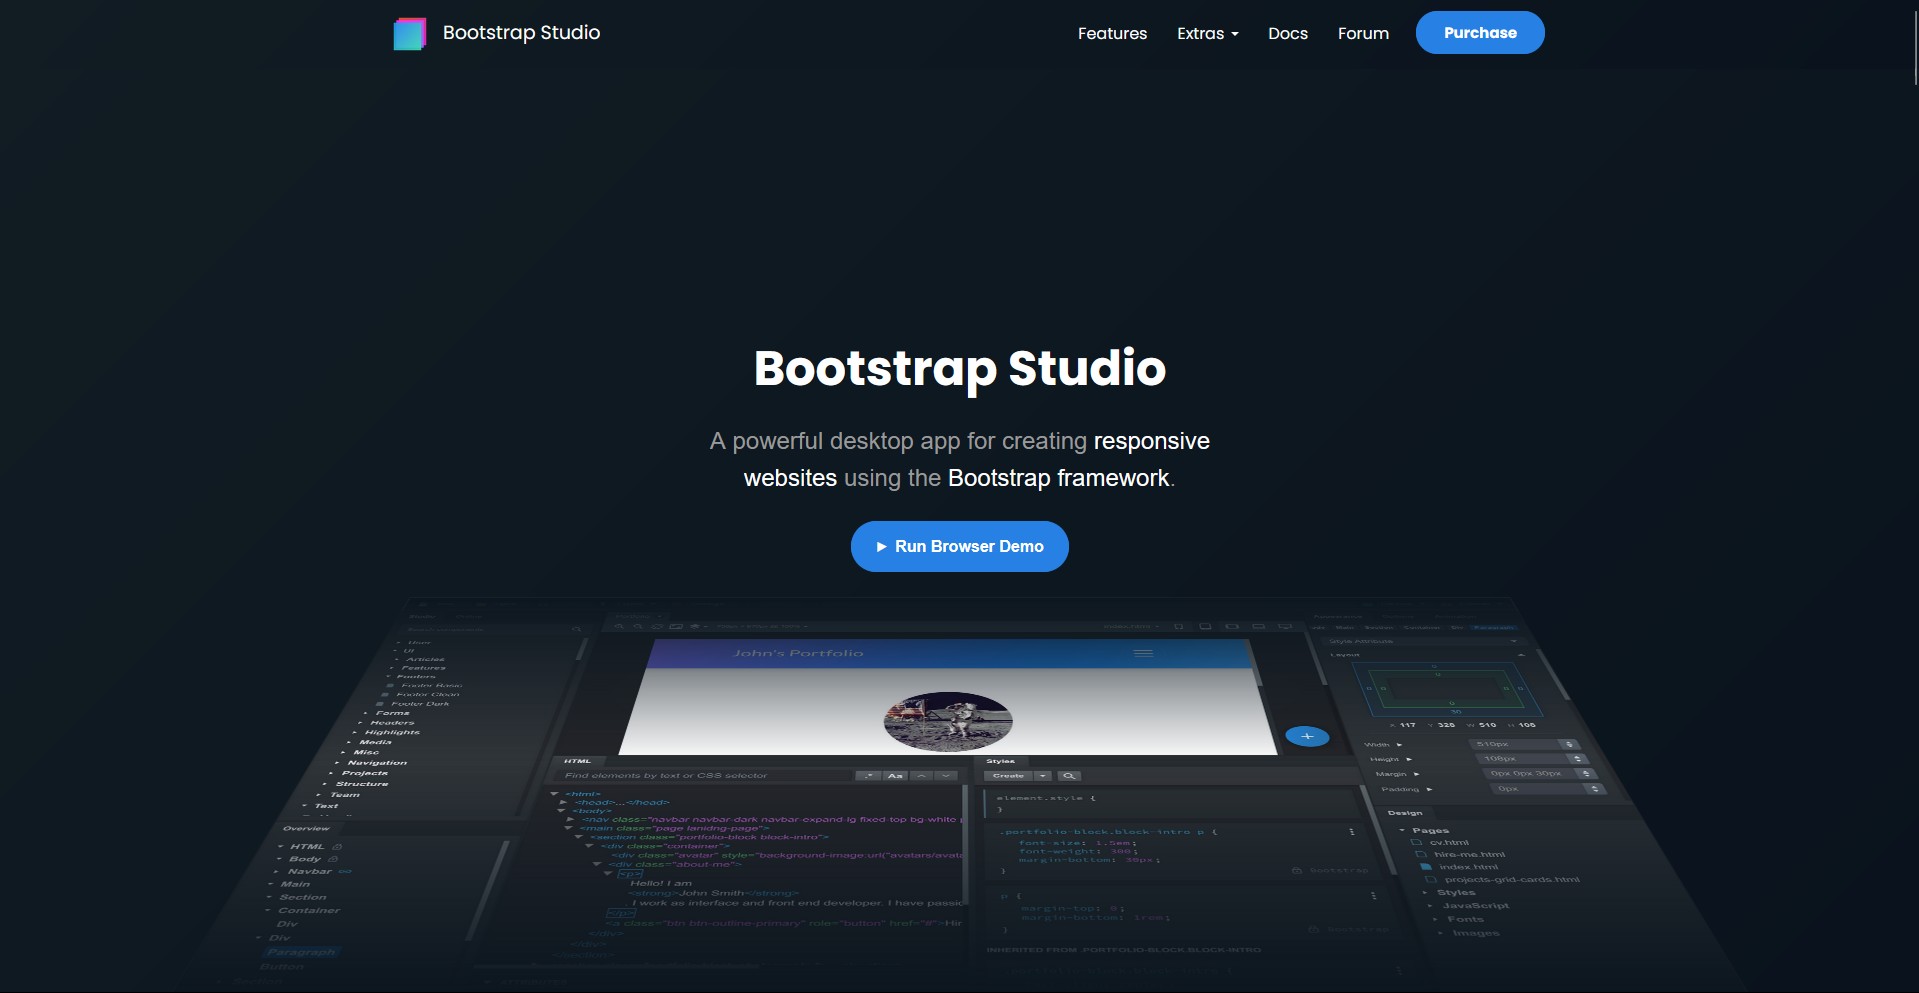 Free Bootstrap Studio Key Activate